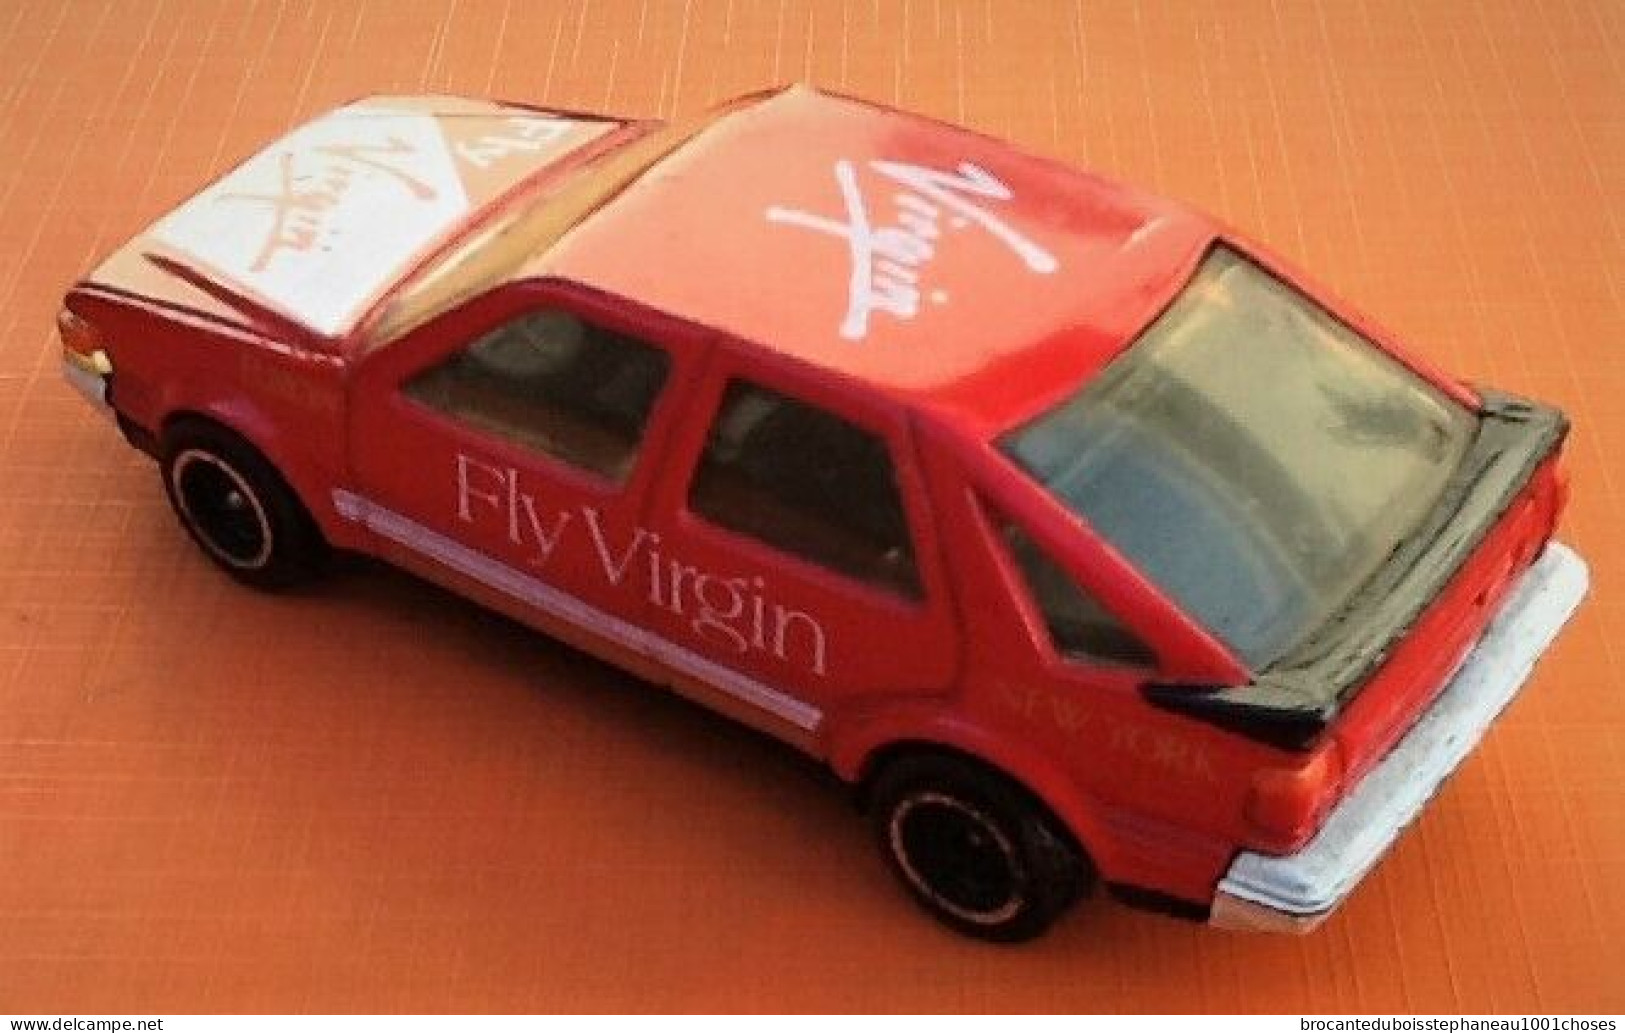 Voiture Miniature   Saab 9000  Fly Virgin  (1985) Corgi - Corgi Toys